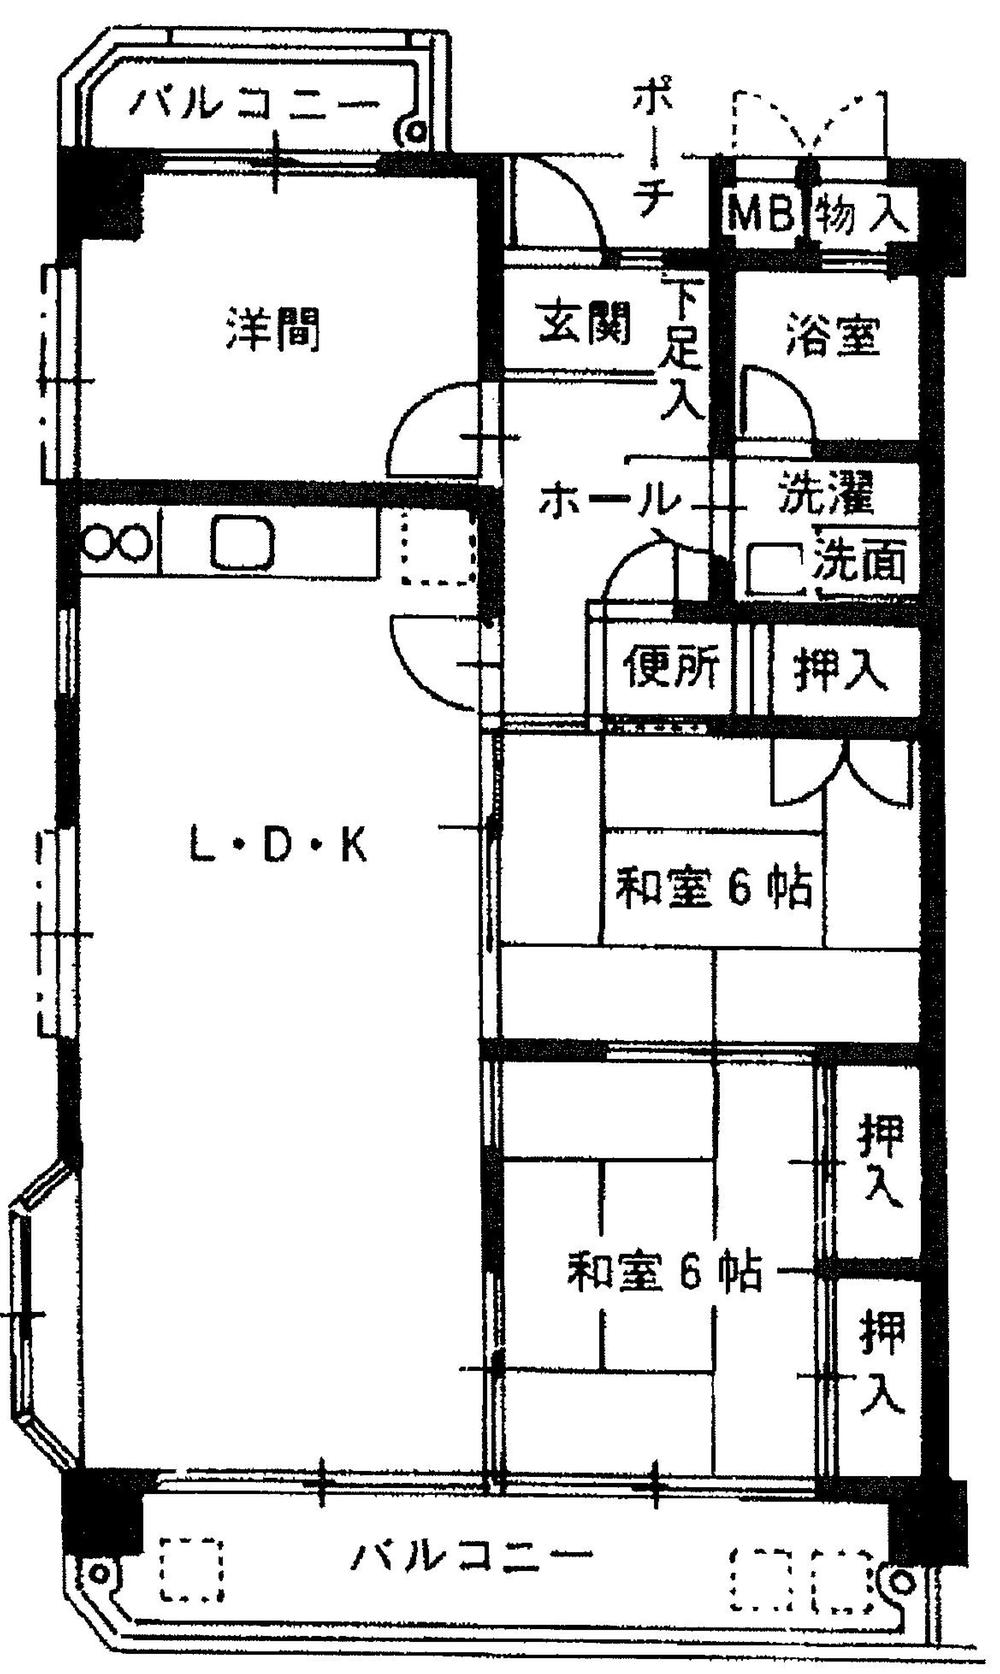 Floor plan. 3LDK, Price 6.5 million yen, Occupied area 76.32 sq m , Balcony area 10 sq m southwest angle room